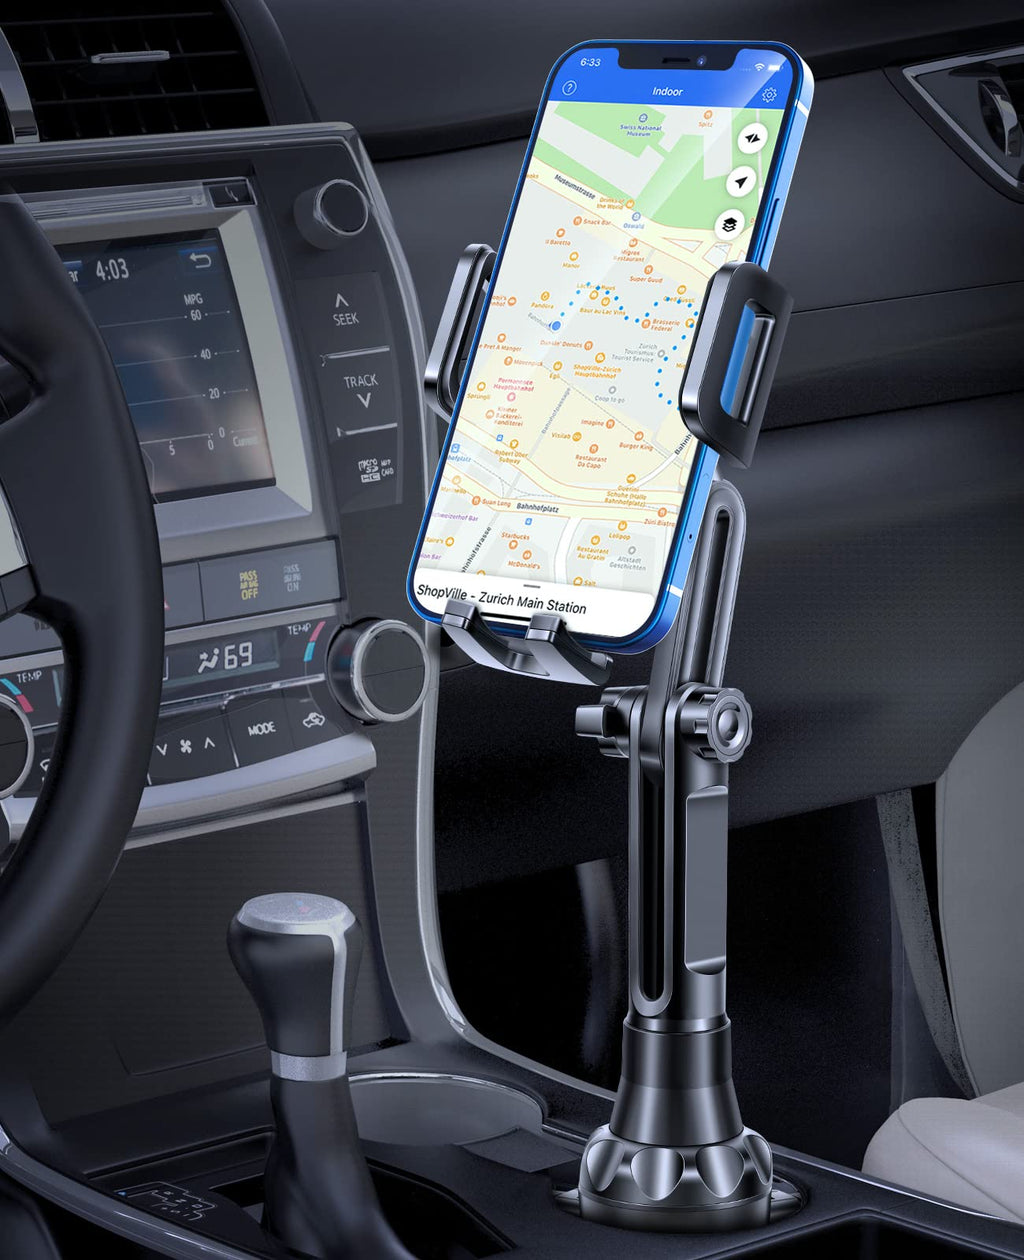  [AUSTRALIA] - Car Cup Holder Phone Mount JC1 Pro Ver. Adjustable Long Pole Automobile Cup Holder Smart Phone Cradle Car Mount for iPhone 11 Pro/XR/XS Max/X/SE/8 Plus/6s/Samsung Galaxy S20+/Note 10/S9/S7 Edge(Black)